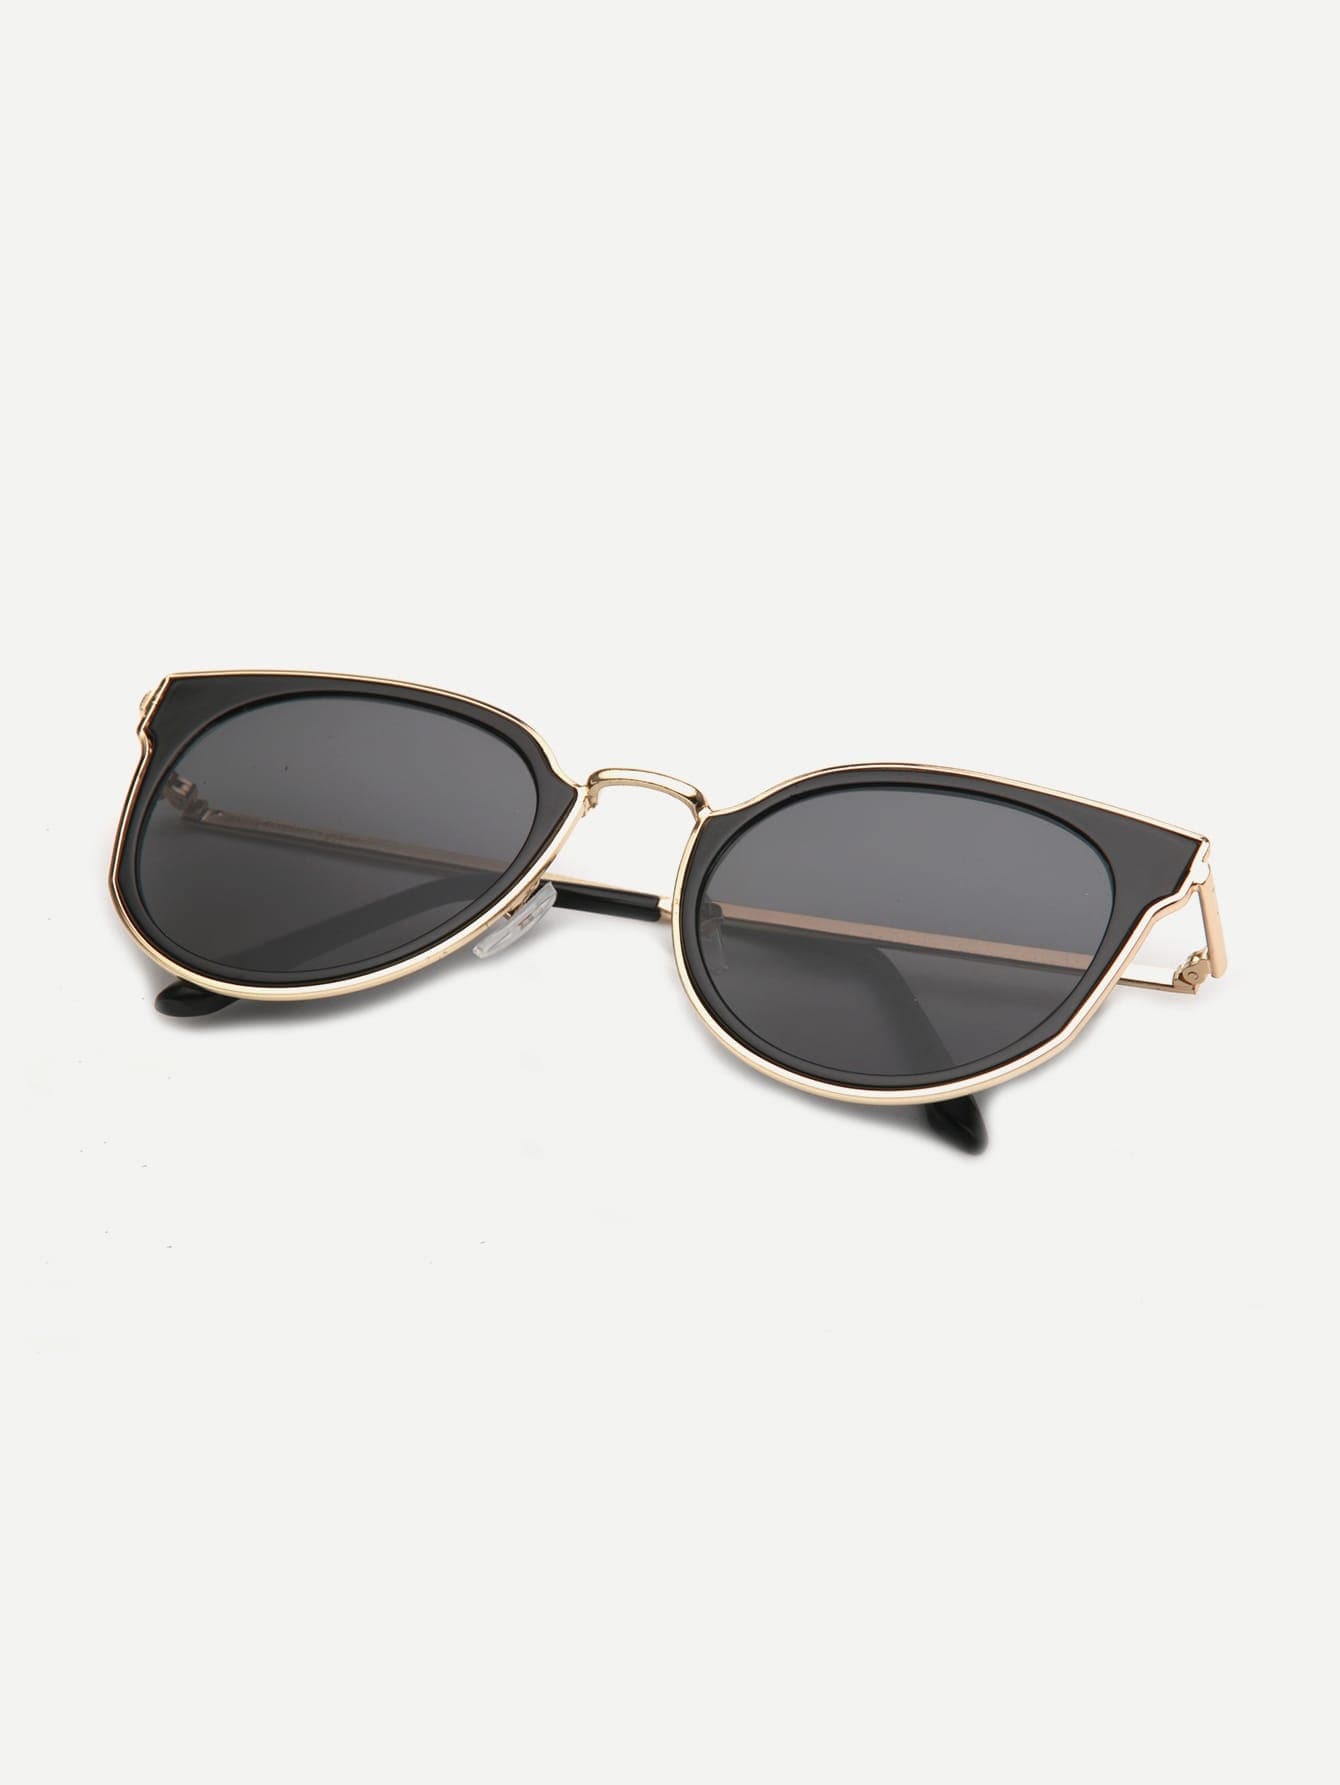 Black Double Frame Sunglasses